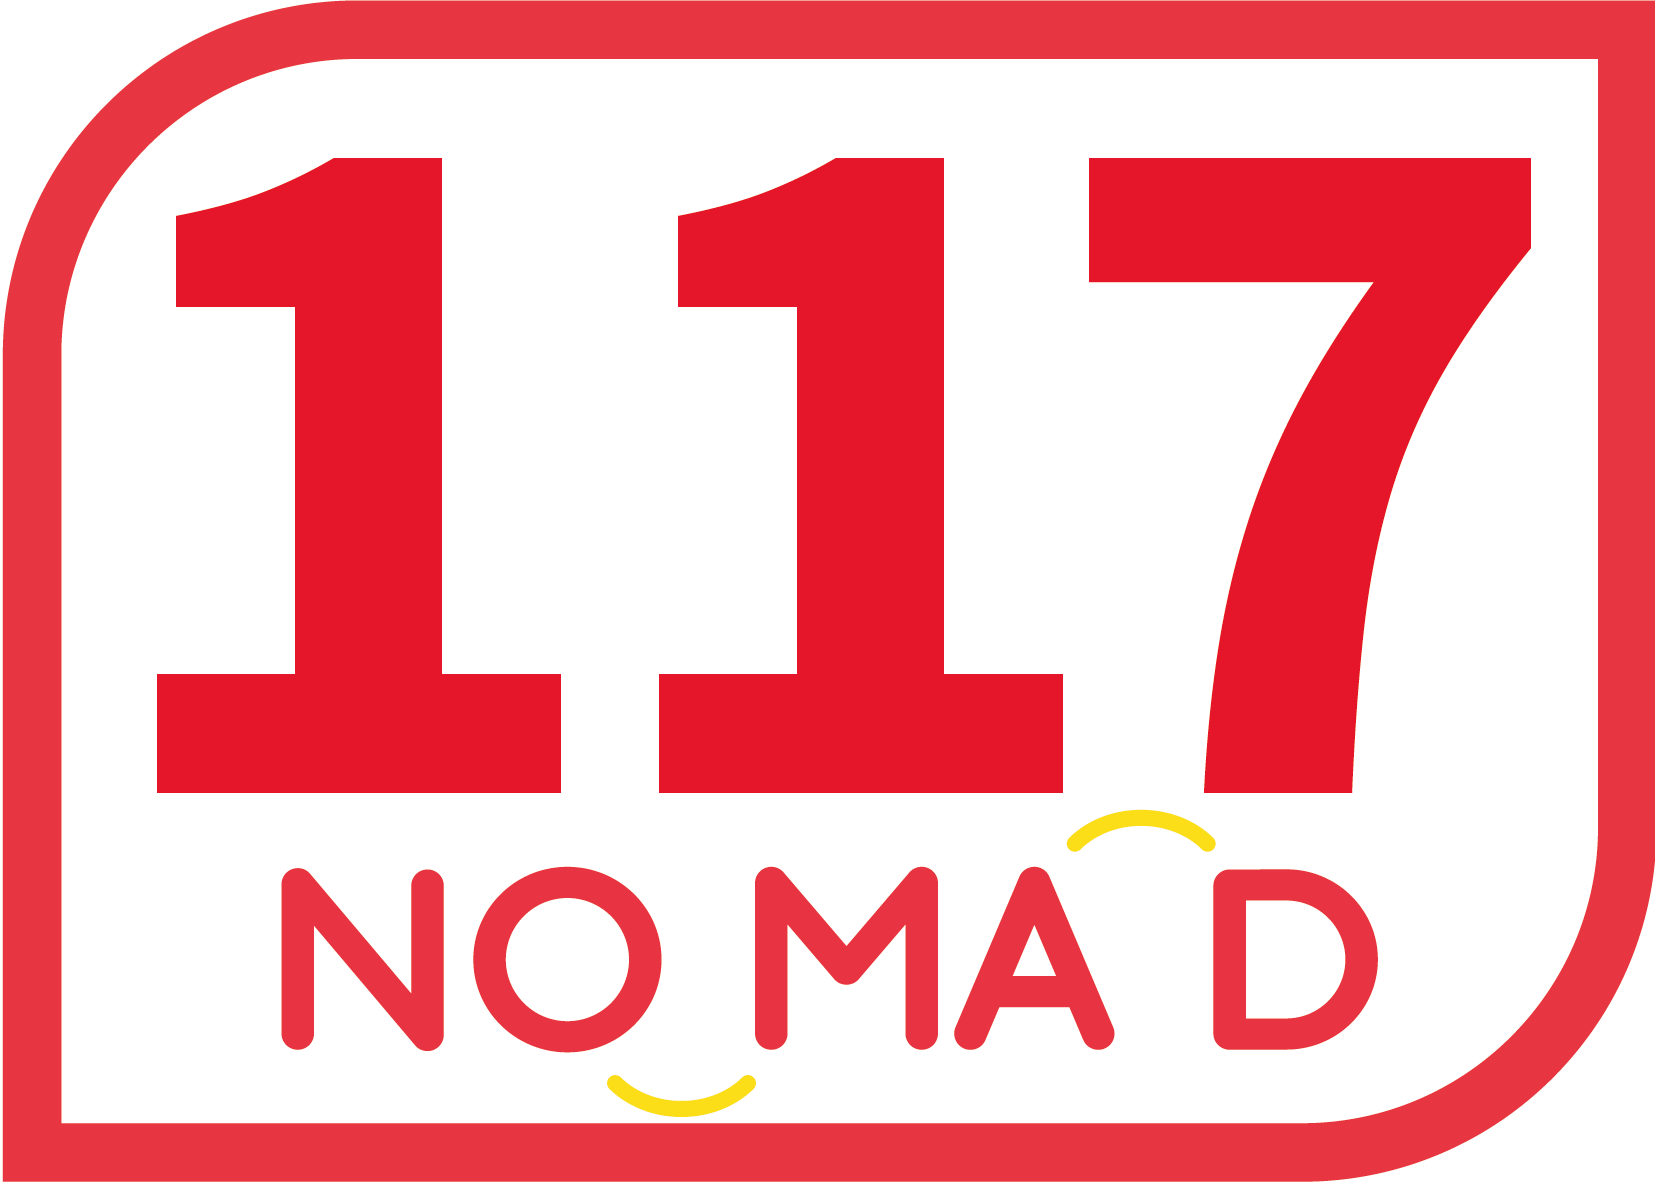 Nomad 117